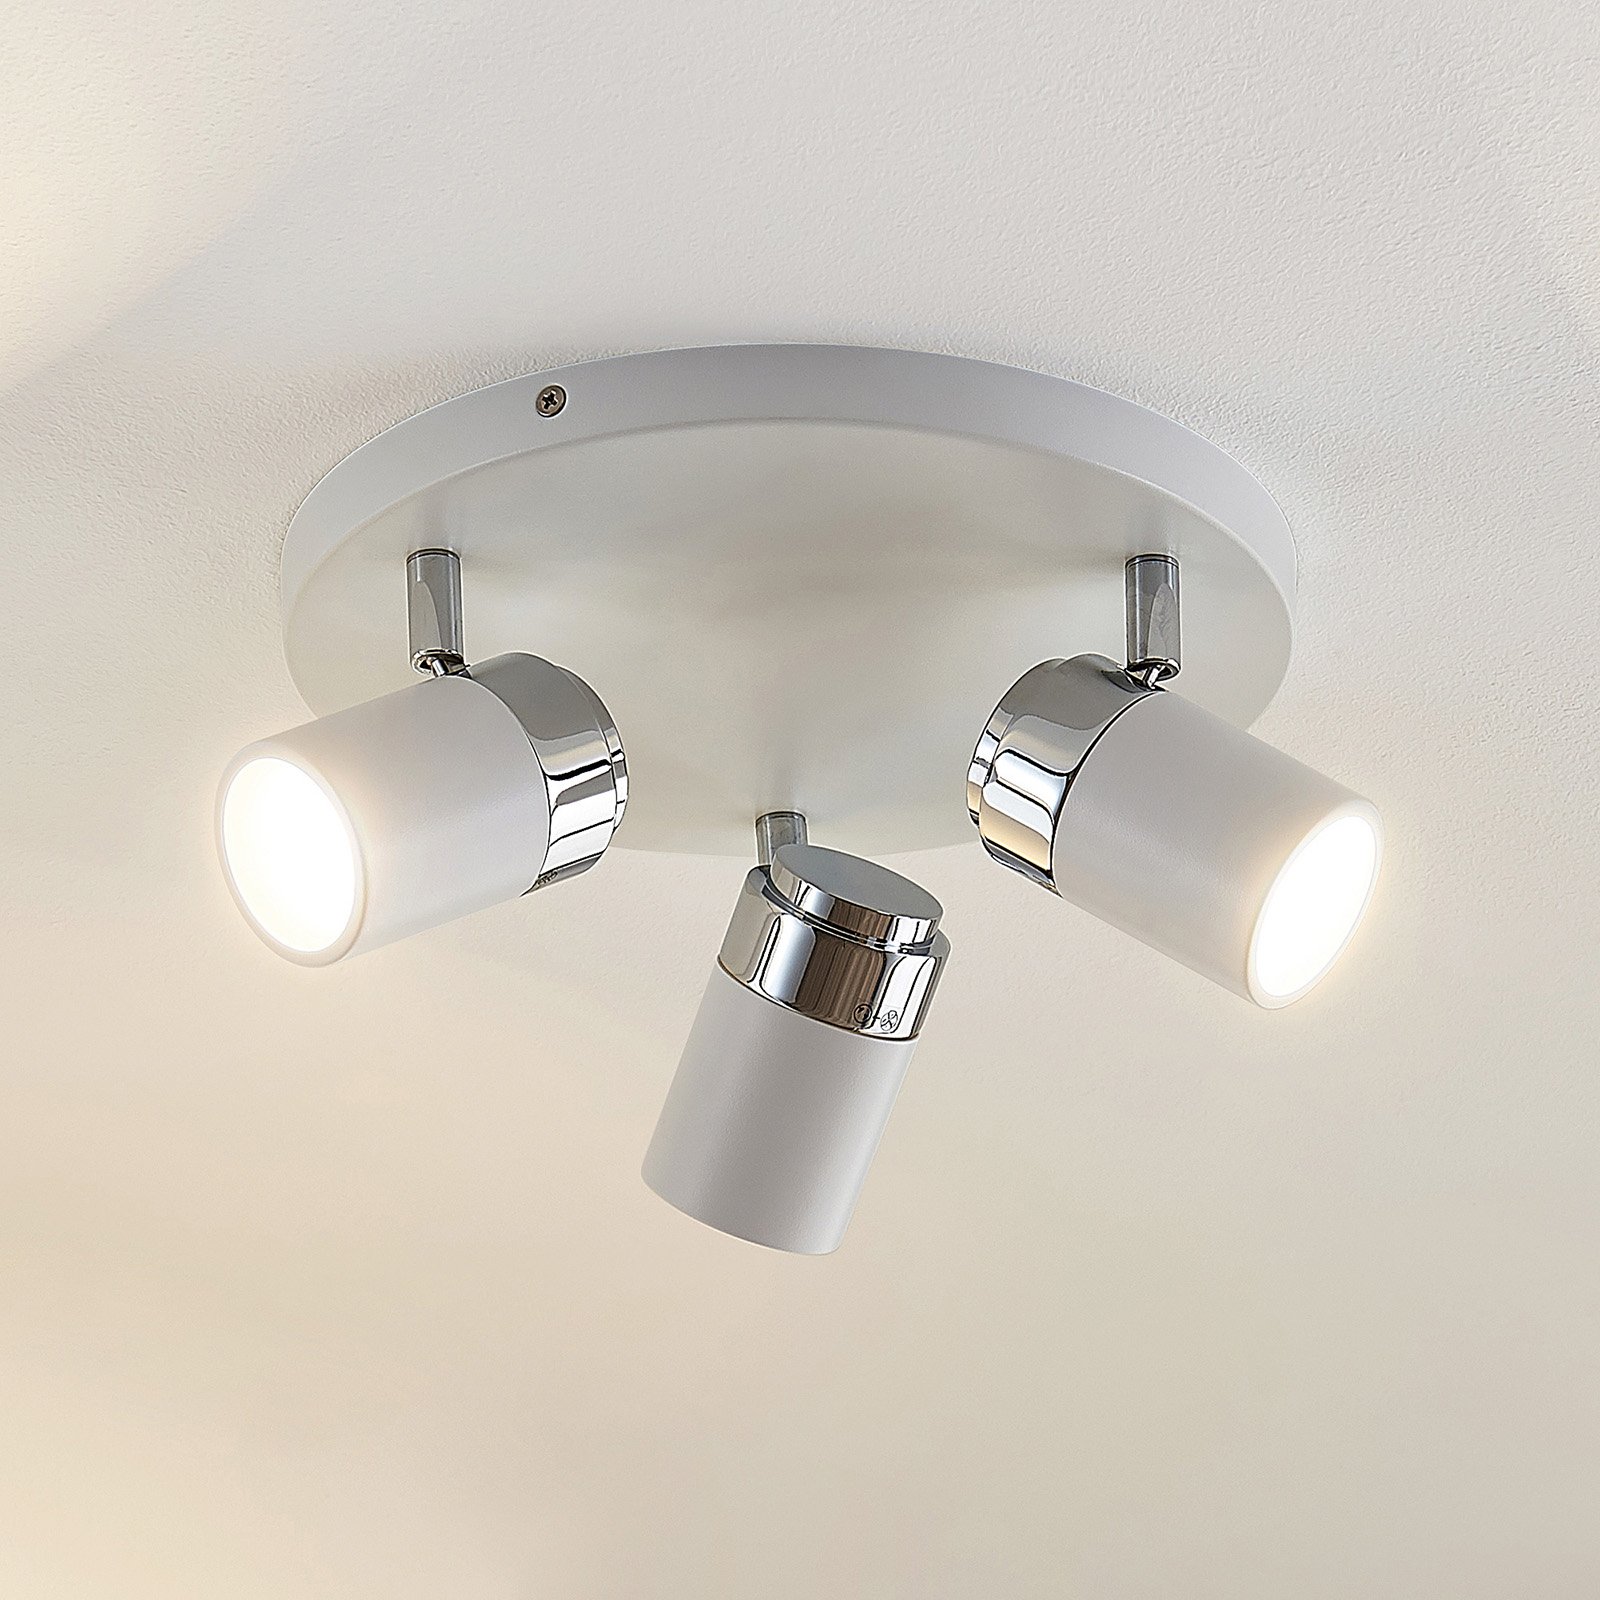 Kardo - badkamer plafondlamp in wit en chroom